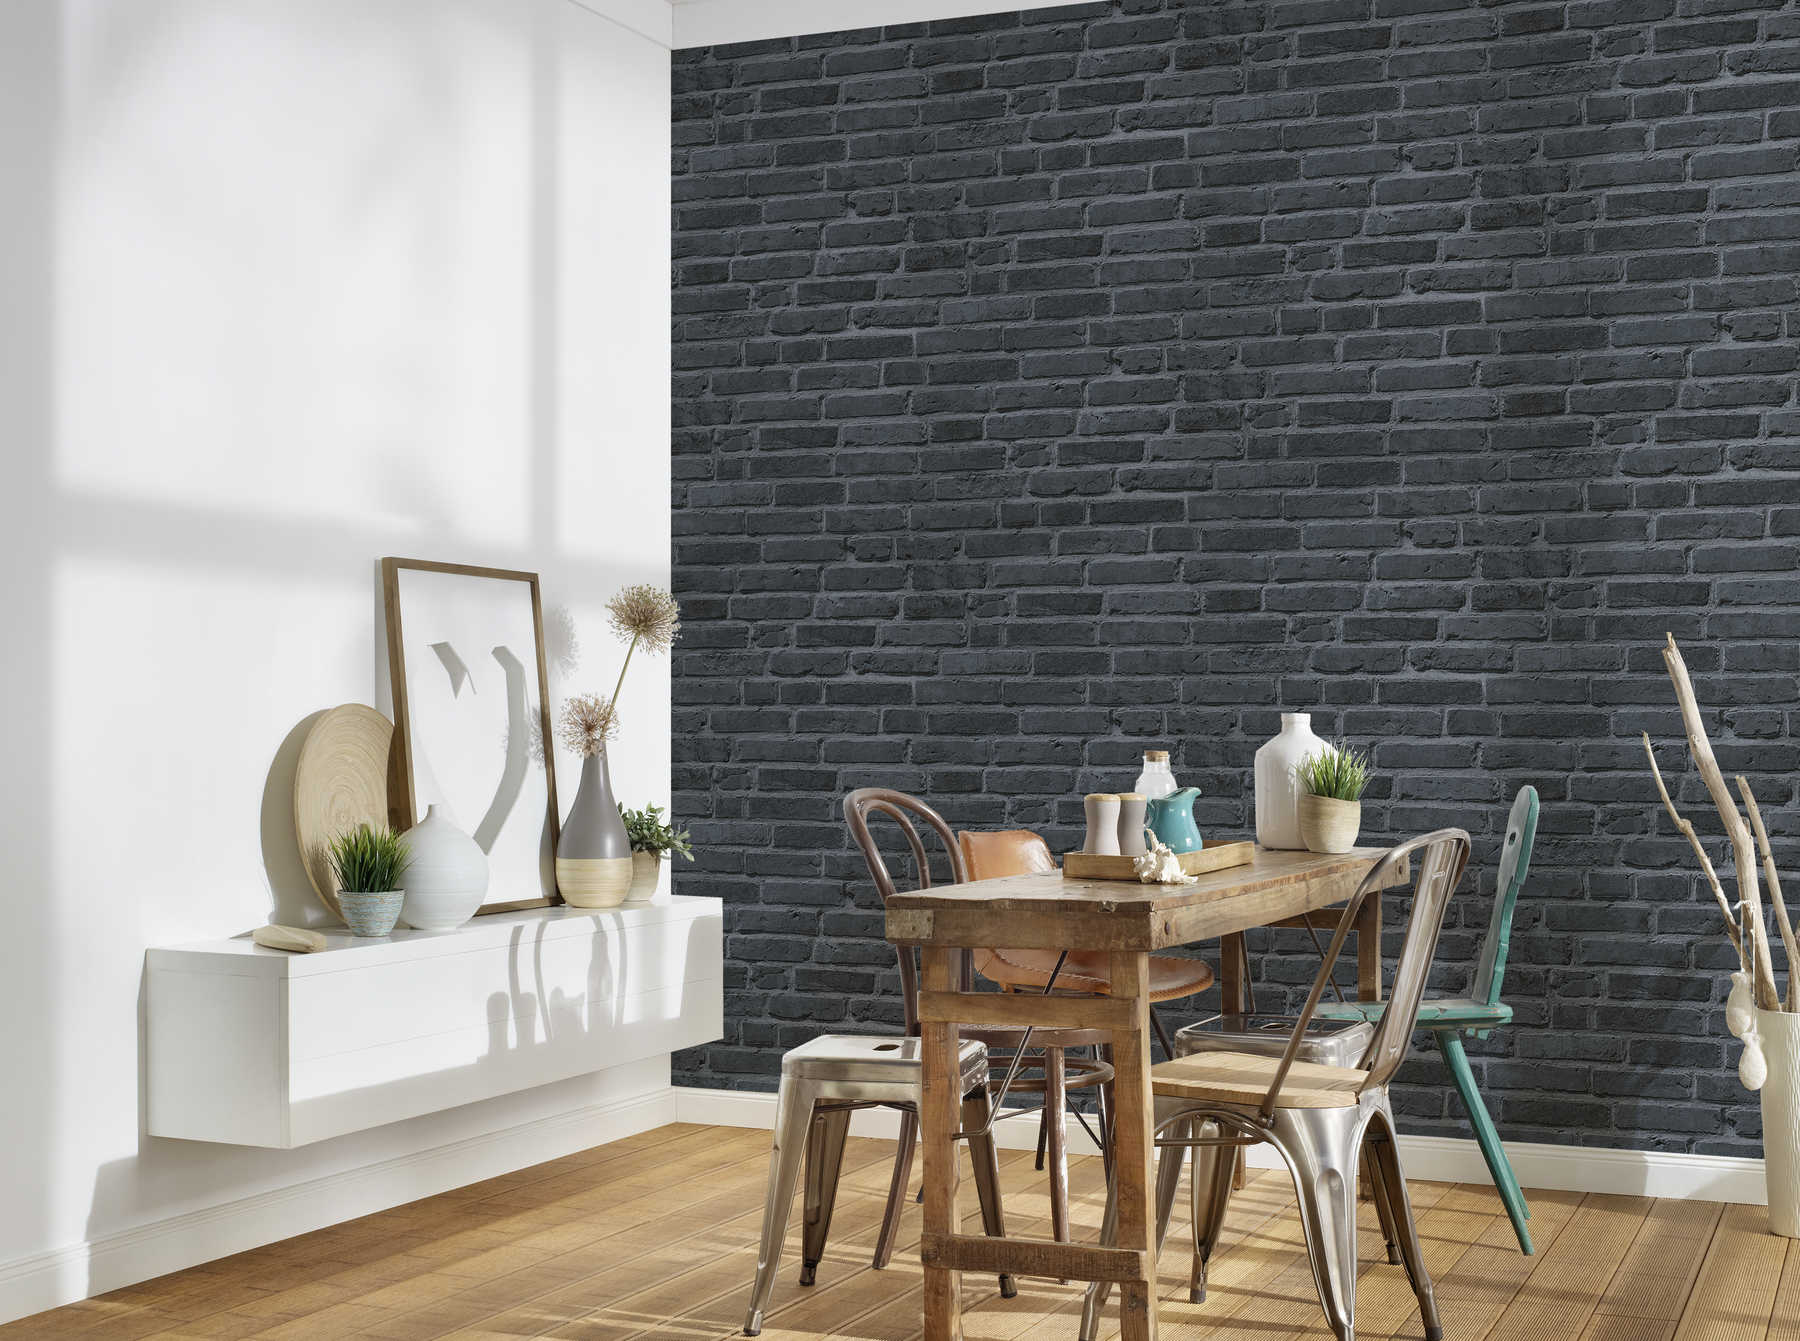             Stone look wallpaper with black bricks - black, grey
        